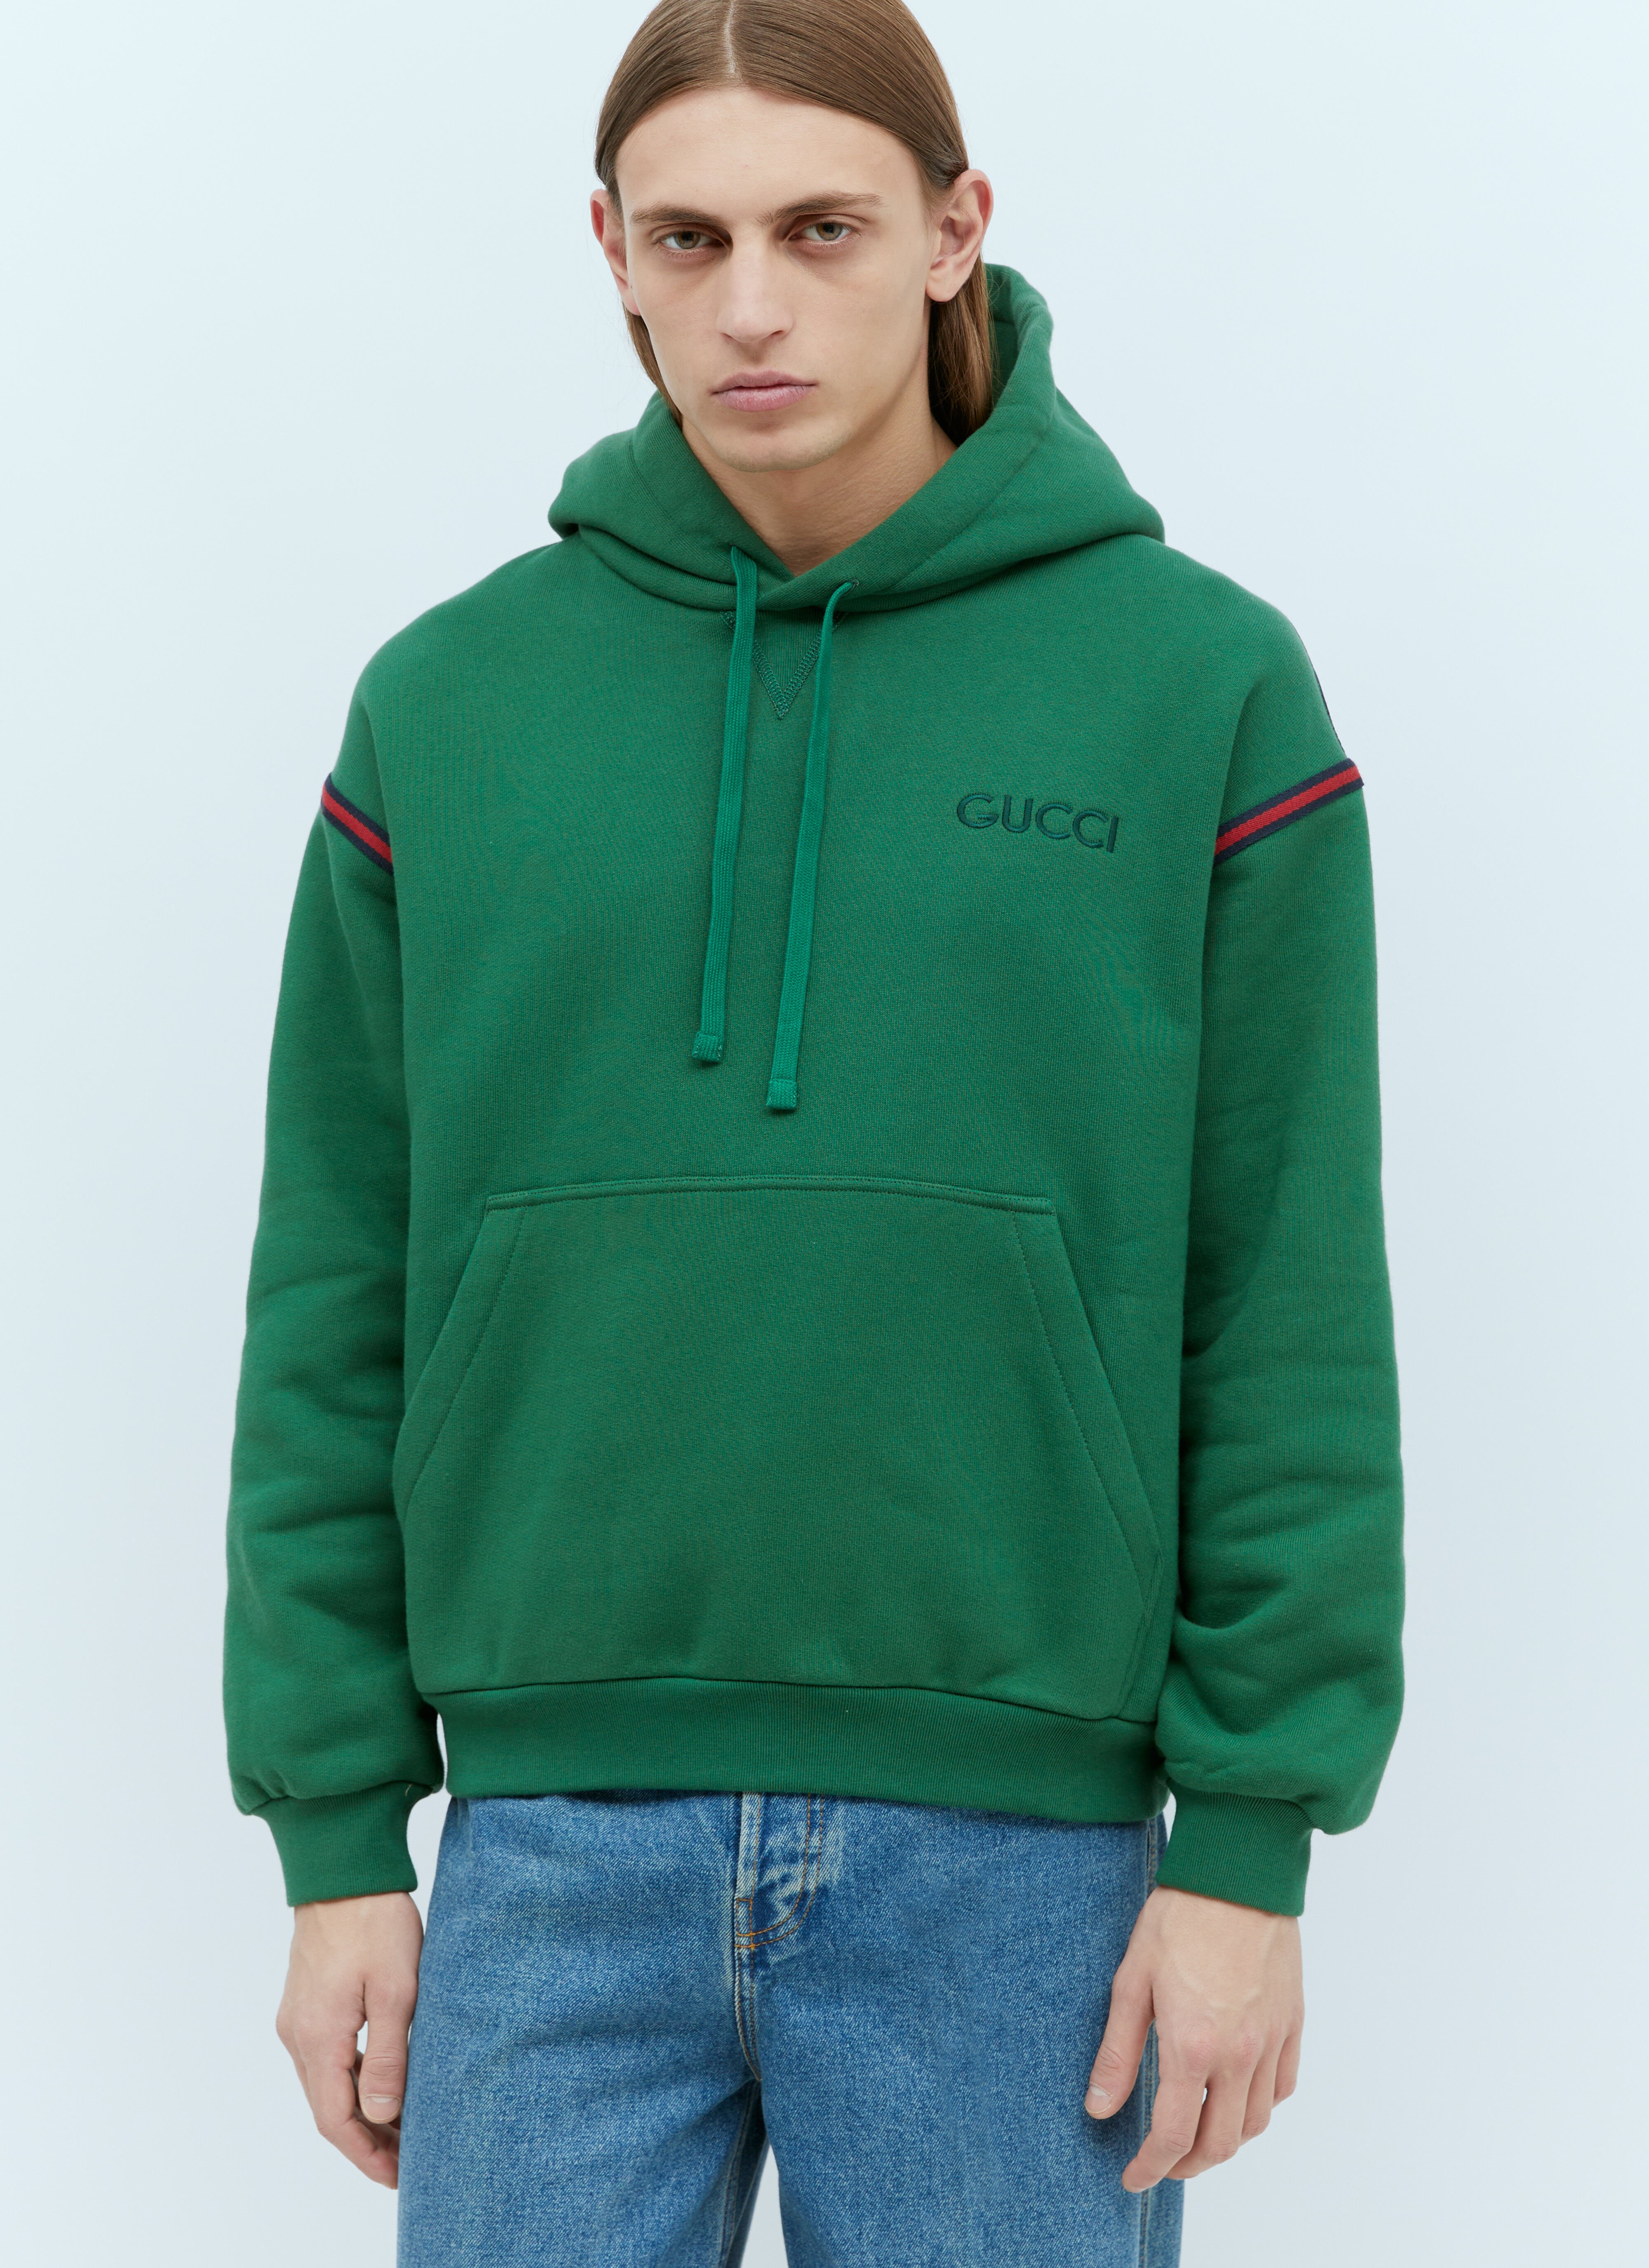 Gucci Logo Embroidery Hooded Sweatshirt Beige guc0155035